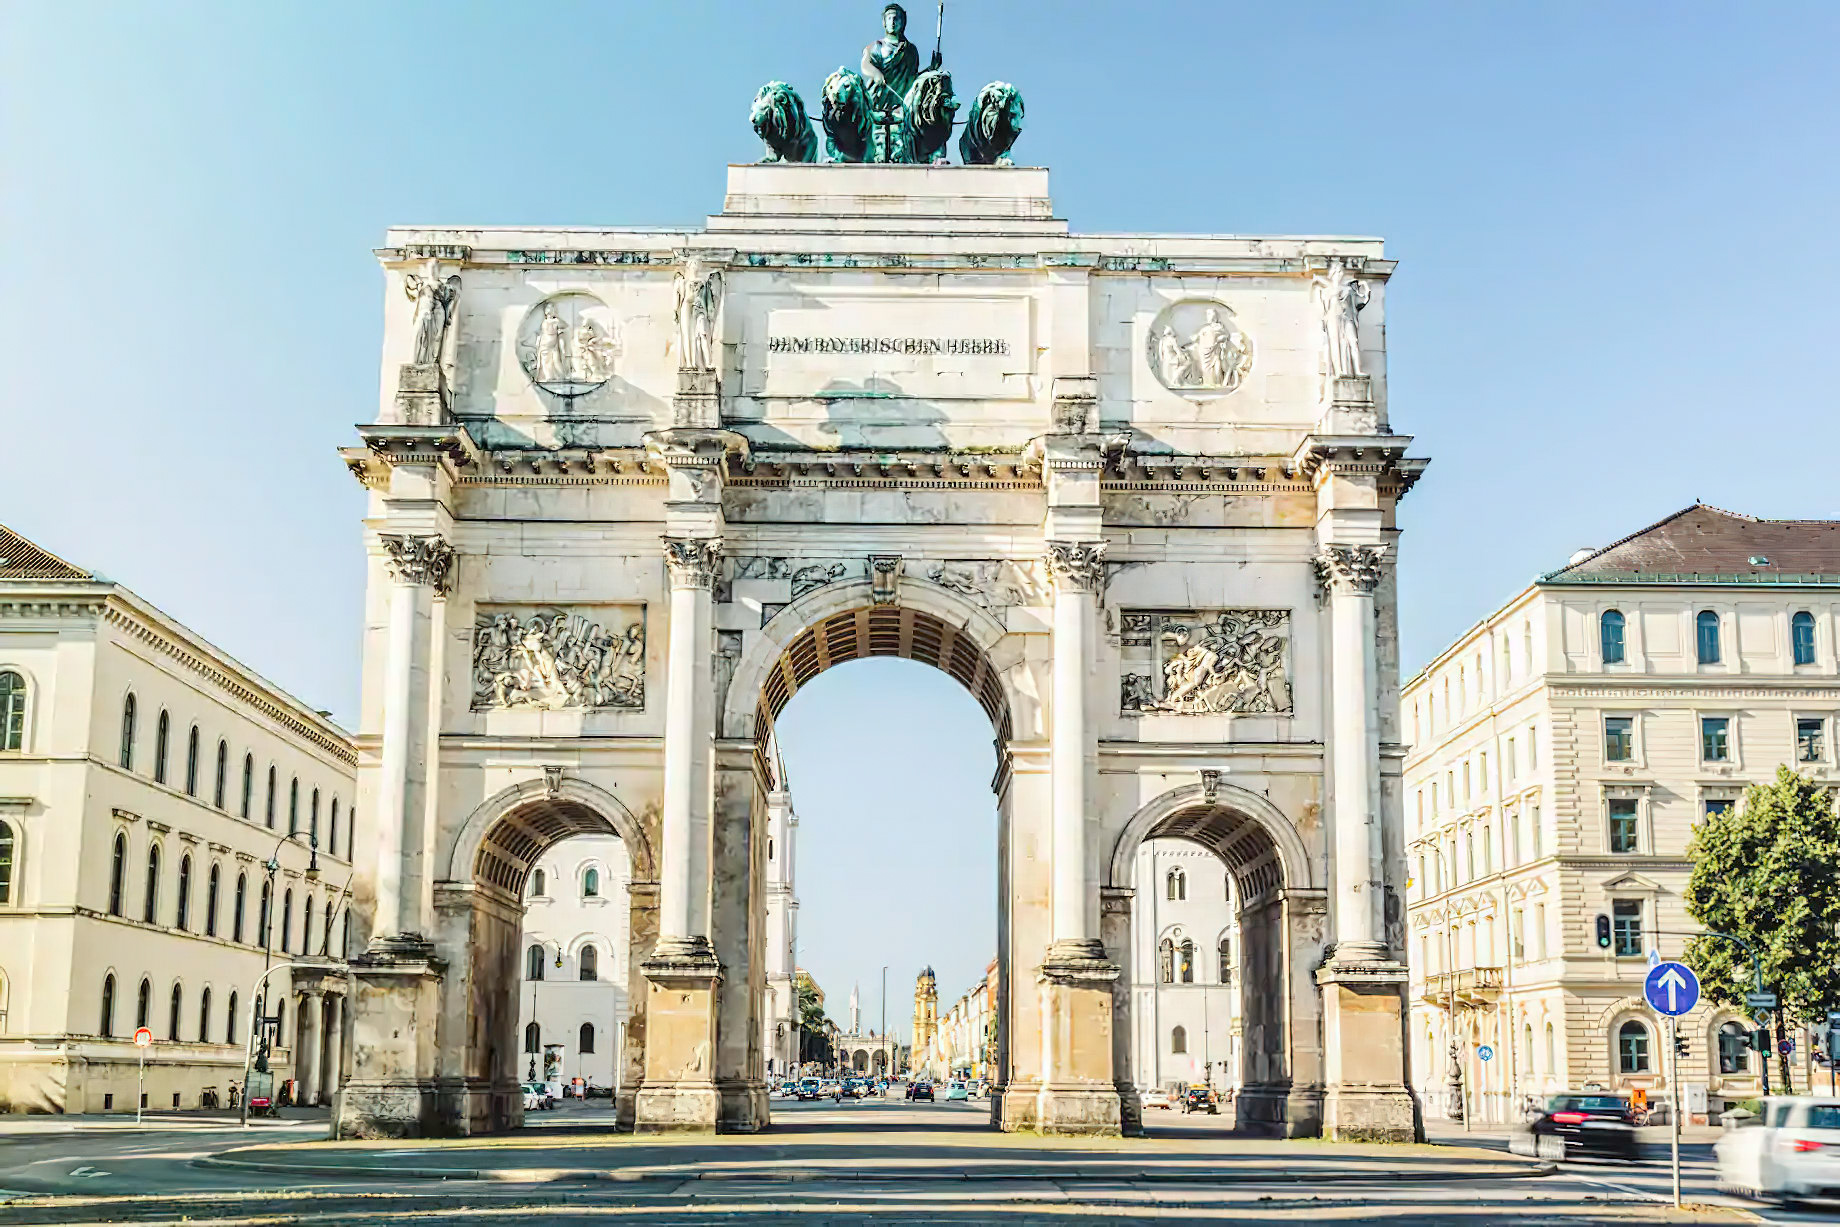 Mandarin Oriental, Munich Hotel – Munich, Germany – Victory Gate – Siegestor Memorial Arch